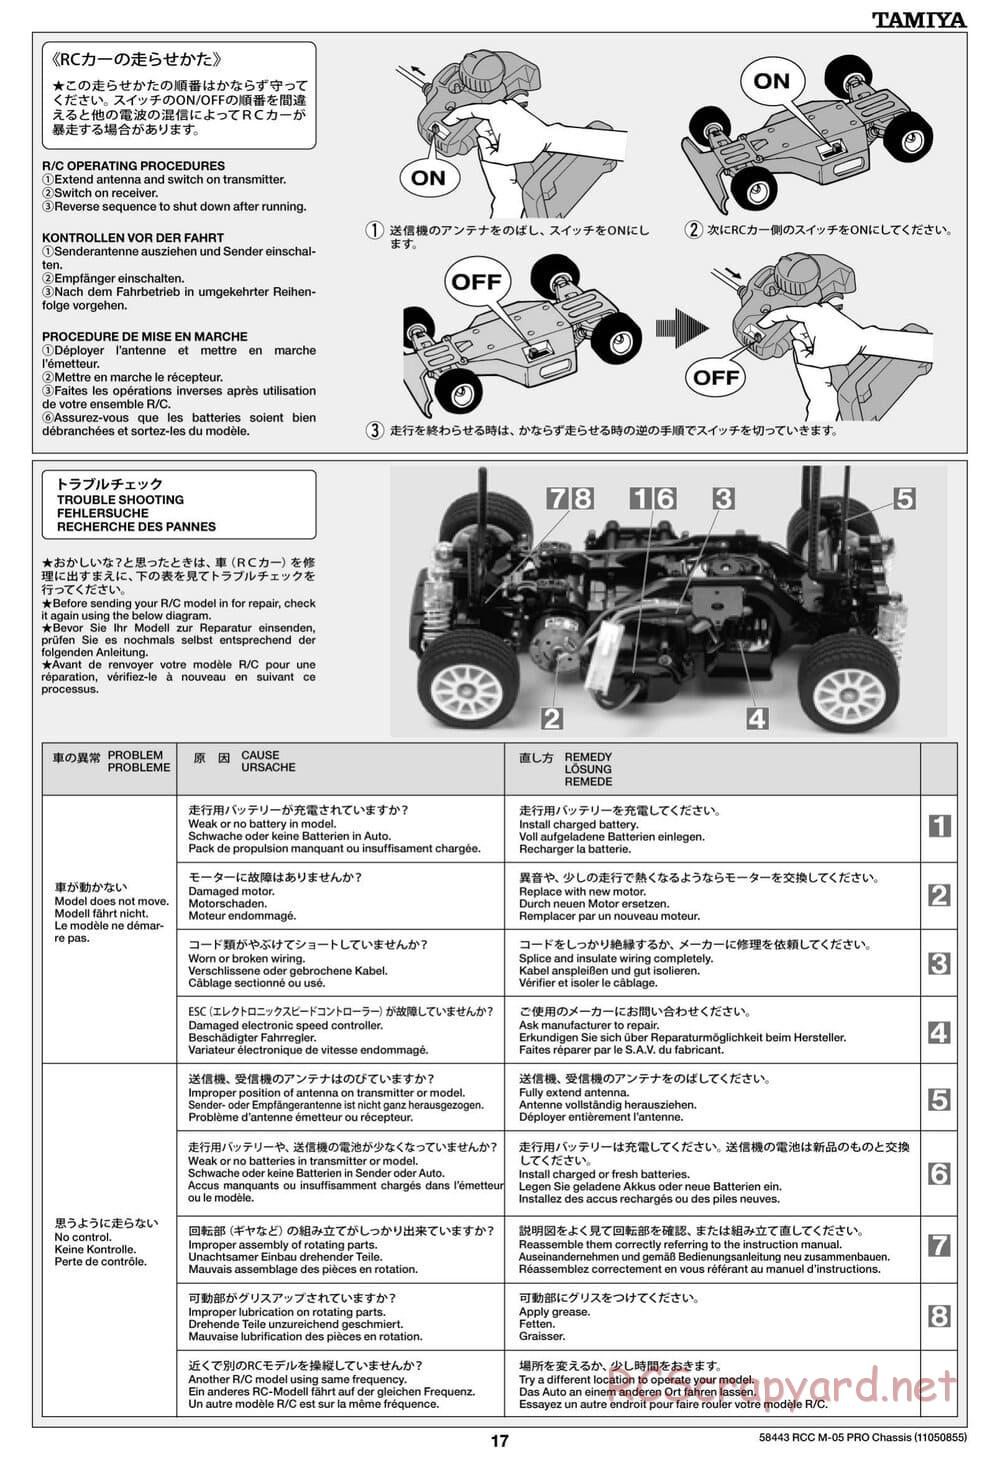 Tamiya - M05-Pro Chassis - Manual - Page 17